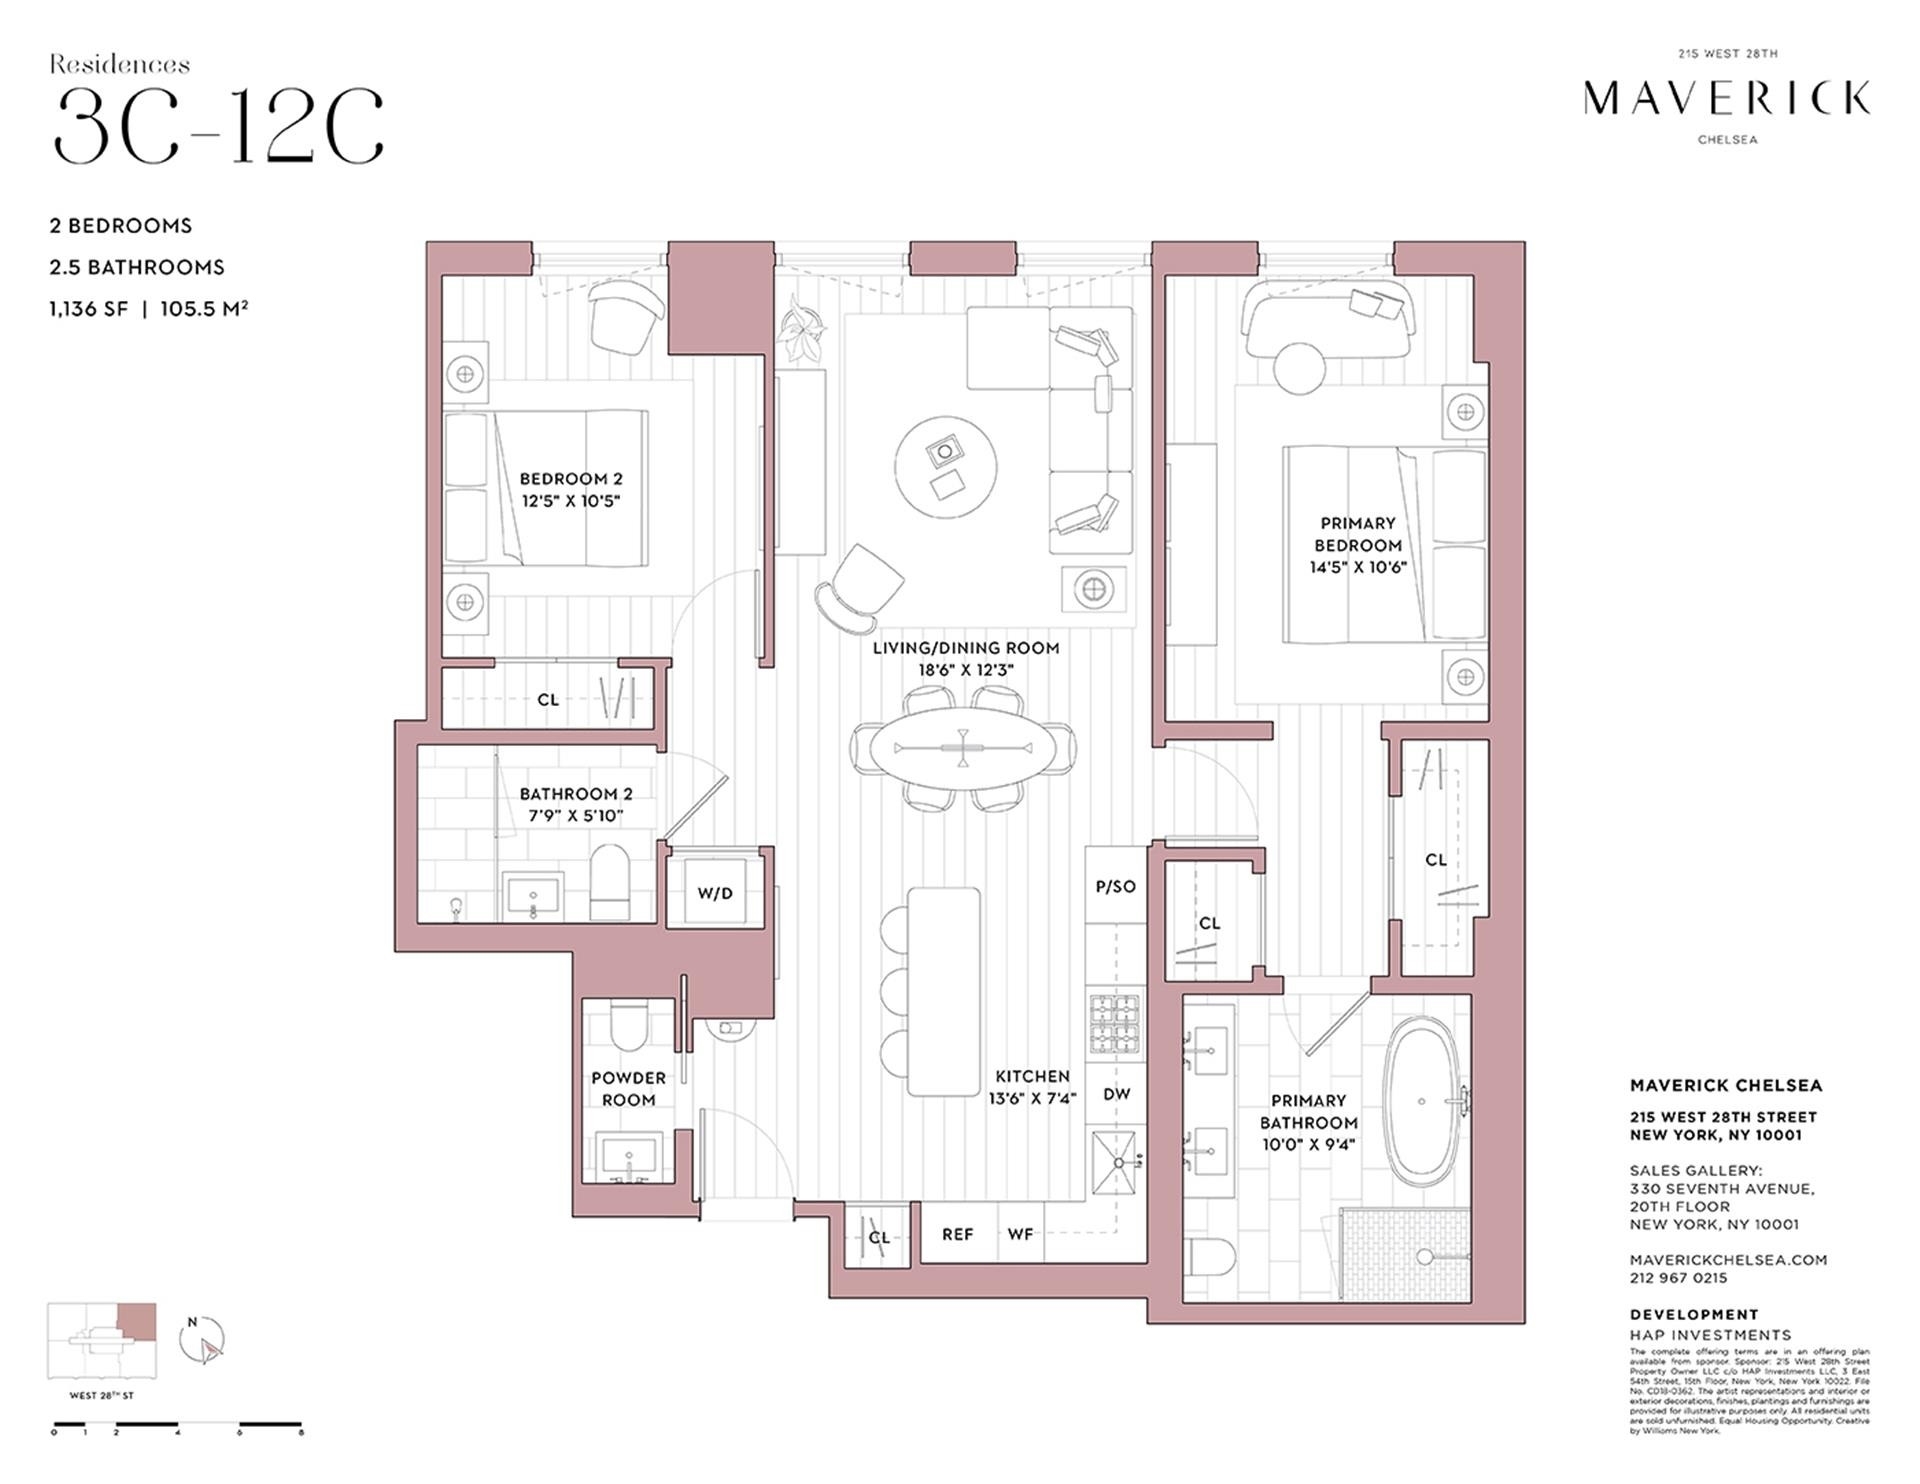 1. Condominiums for Sale at Maverick, 215 W 28TH ST, 9C Chelsea, New York, NY 10001